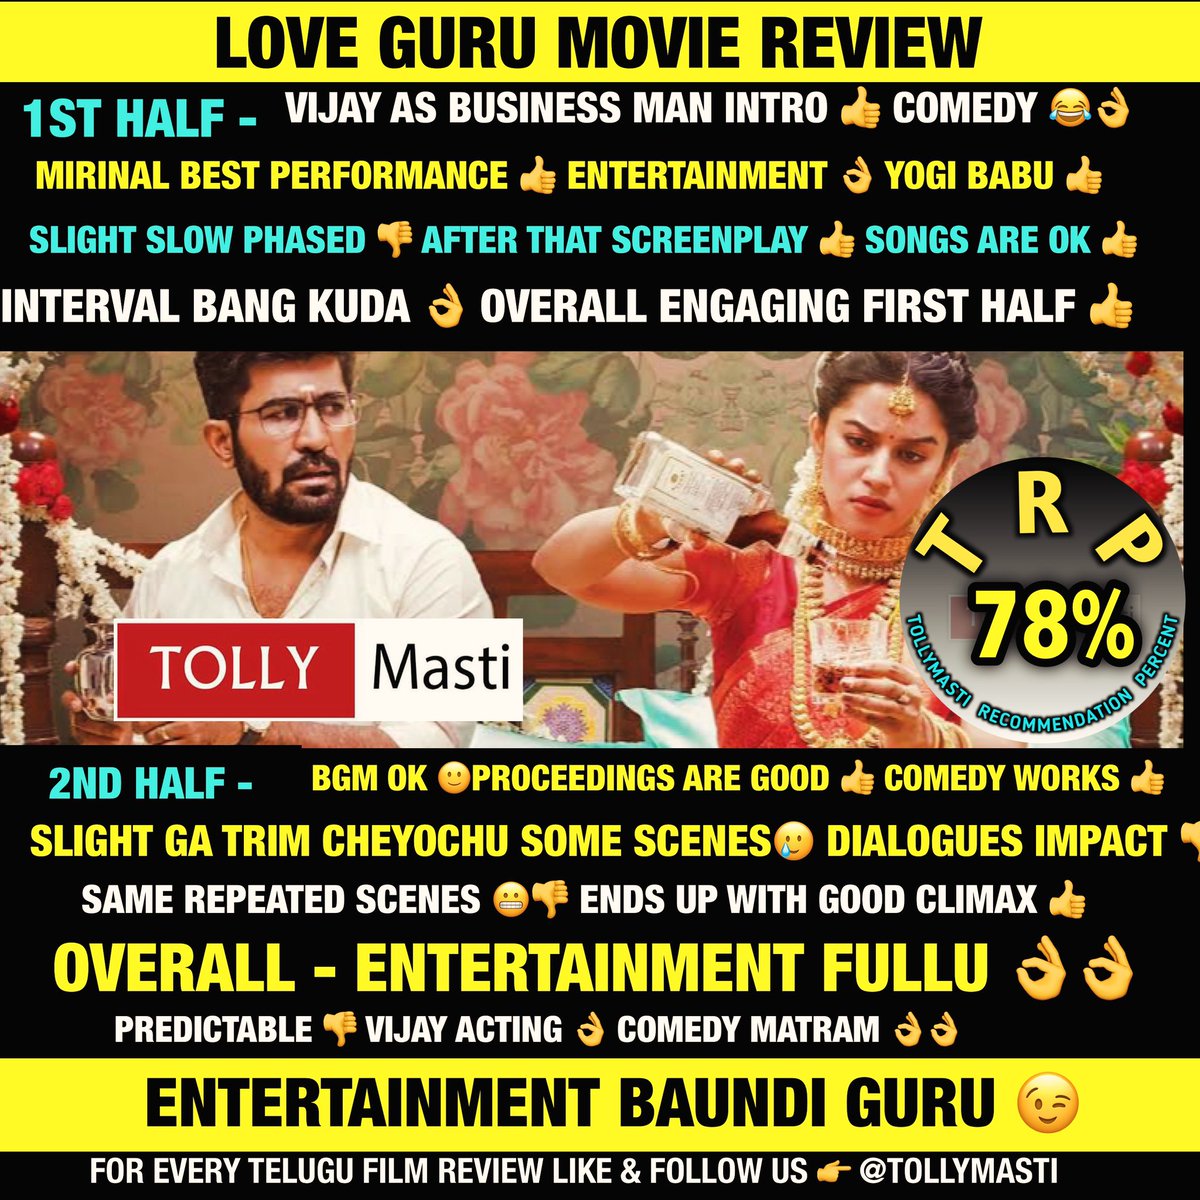 Good Movie 🙌🏻🙌🏻
#LoveGuru #VijayAntony #Mirinal #LoveguruReview 

Follow us 👉 @tollymasti